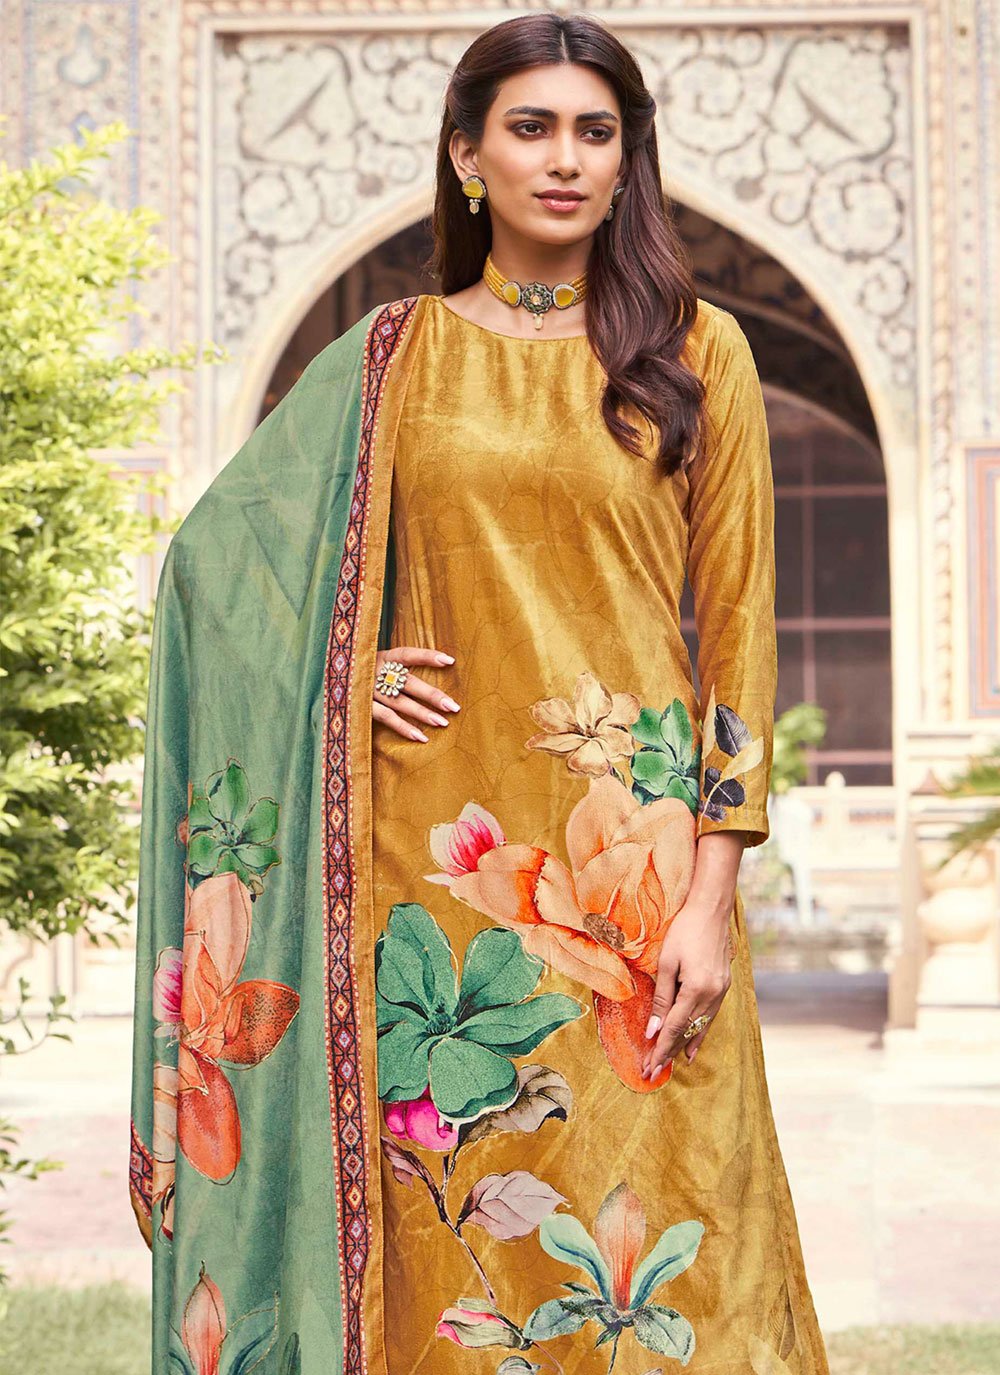 Velvet Salwar Suit - Buy Online on Clothsvilla.com at best price